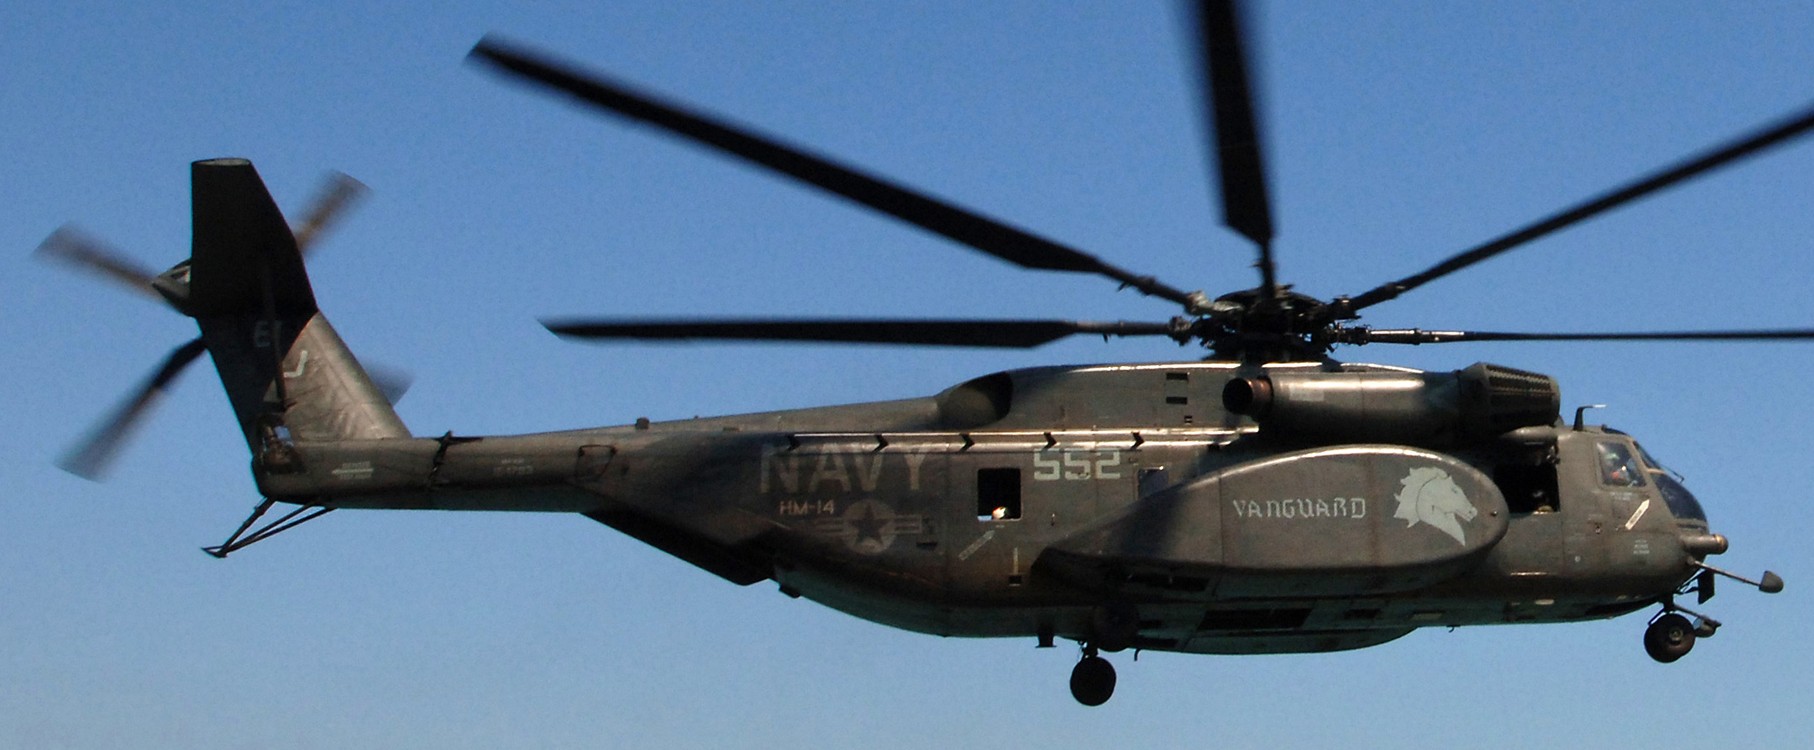 hm-14 vanguard helicopter mine countermeasures squadron navy mh-53e sea dragon 41